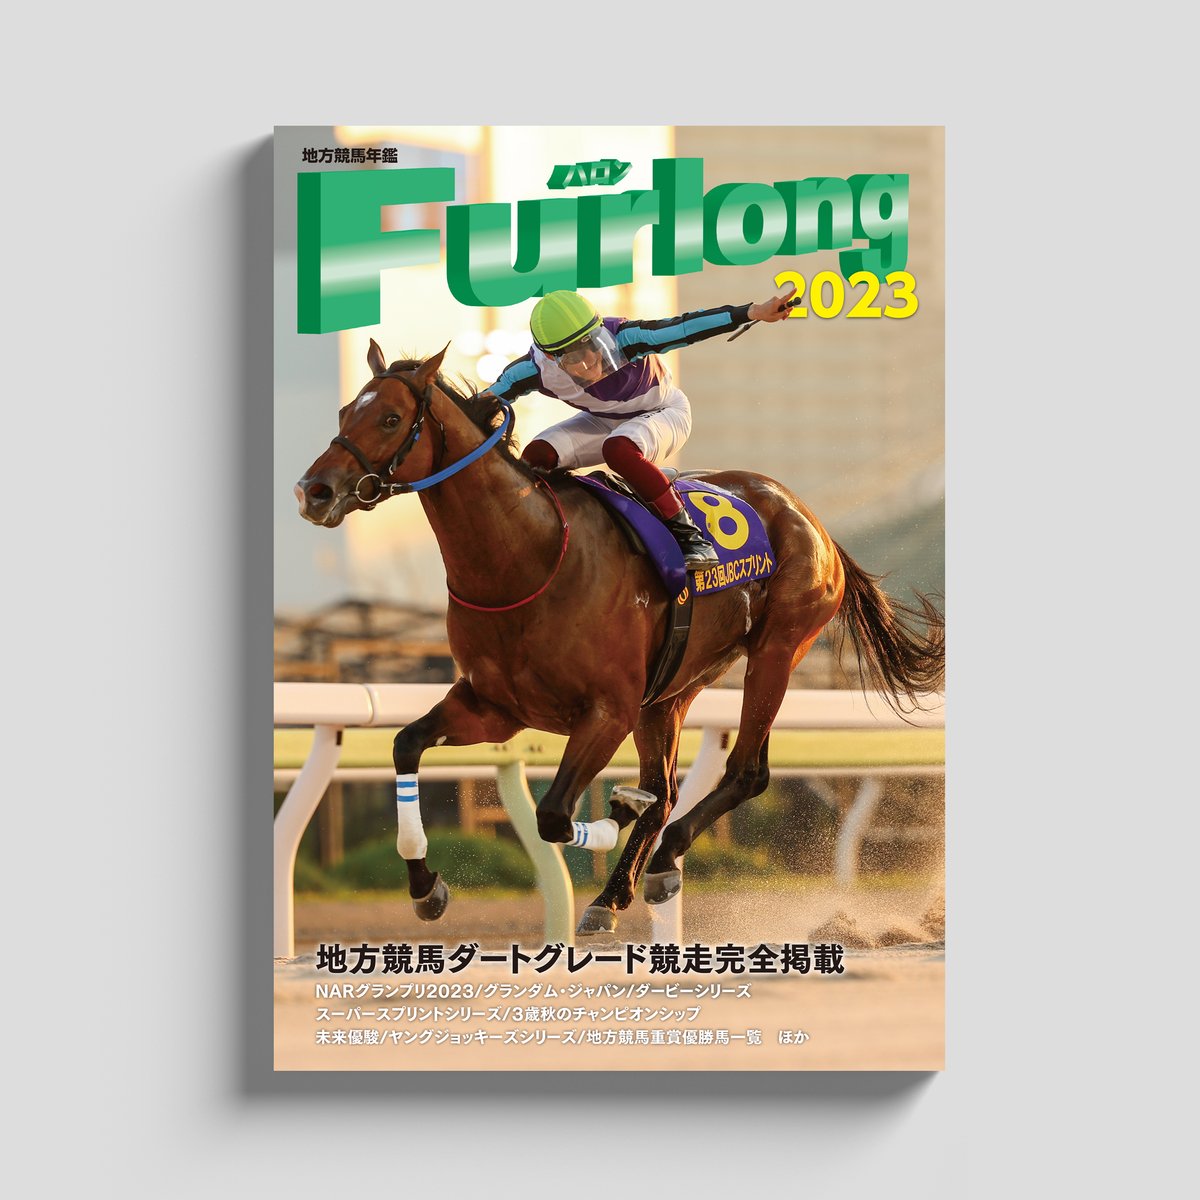 Furlong2023 | ハクバオウジ株式会社